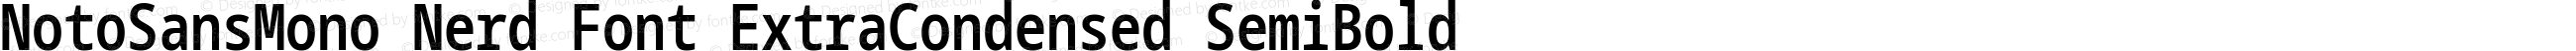 Noto Sans Mono ExtraCondensed SemiBold Nerd Font Complete